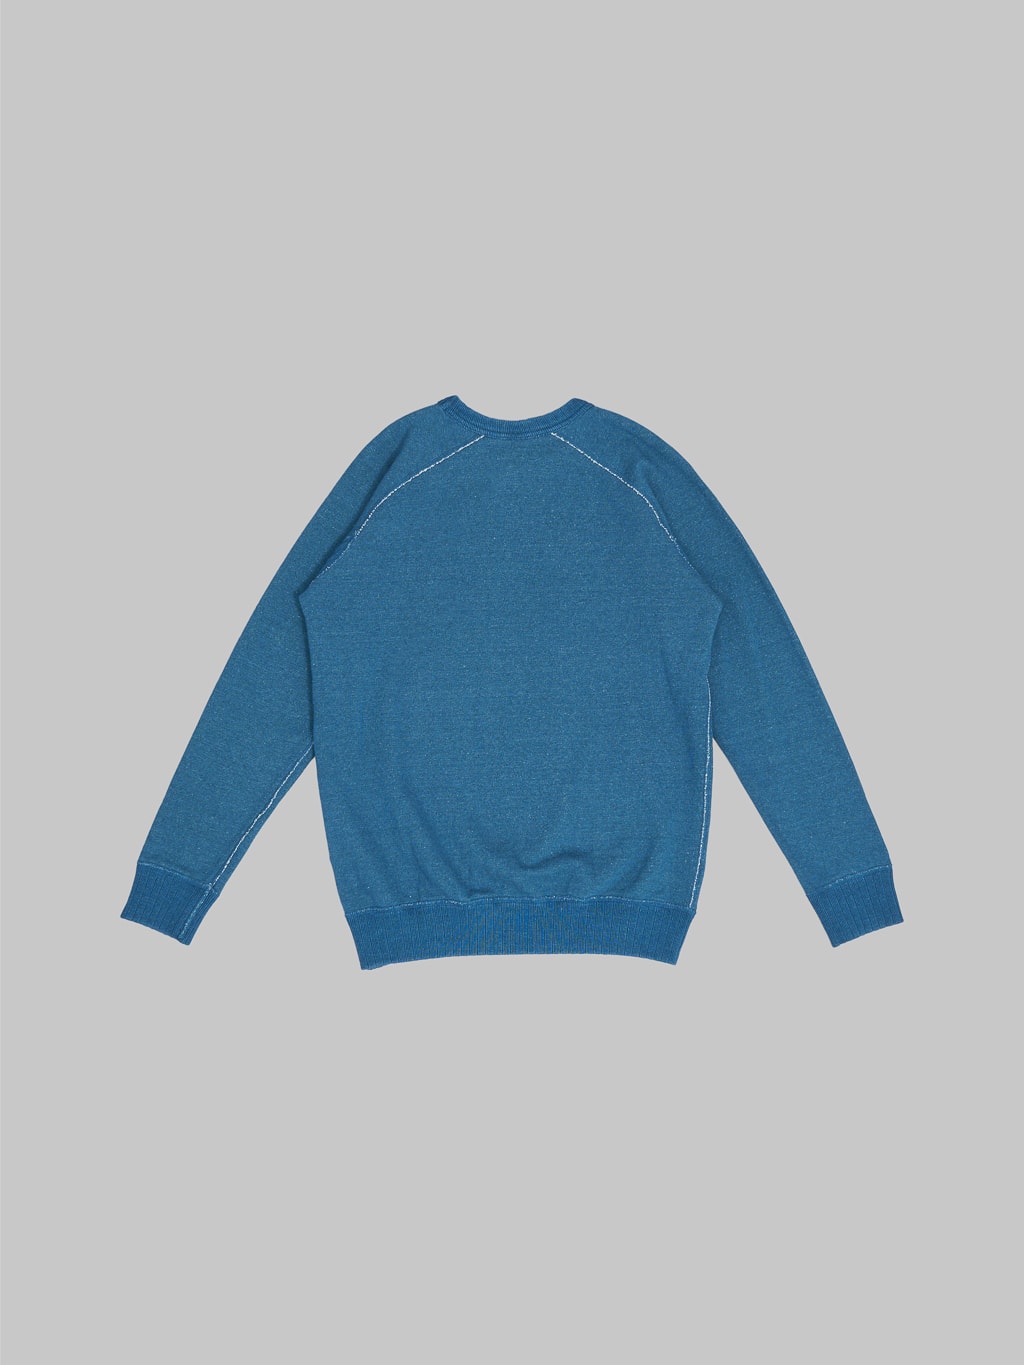 Pure Blue Japan Slub Yarn Sweatshirt Greencast Indigo back